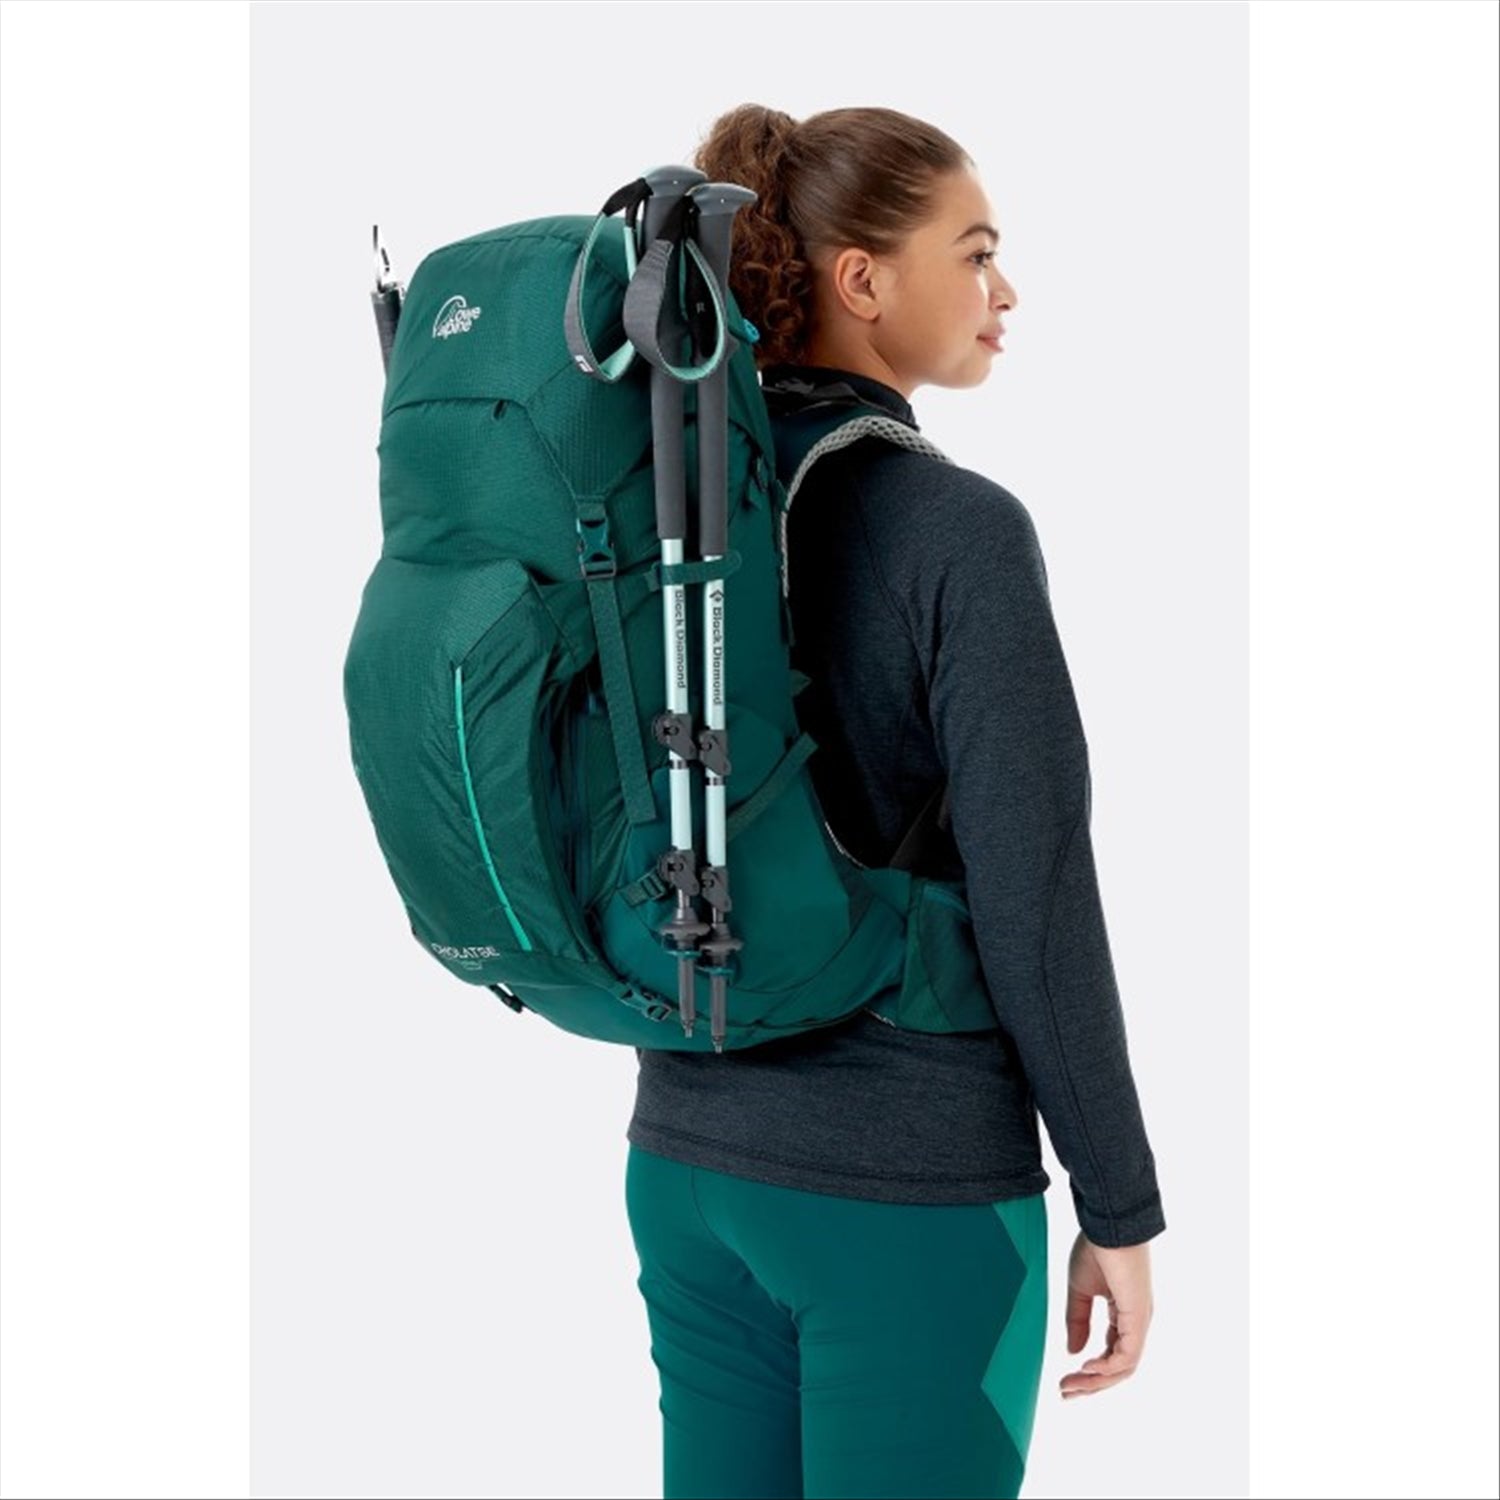 Lowe Alpine Lowe Alpine Cholatse ND 40:45 Womens Backpack